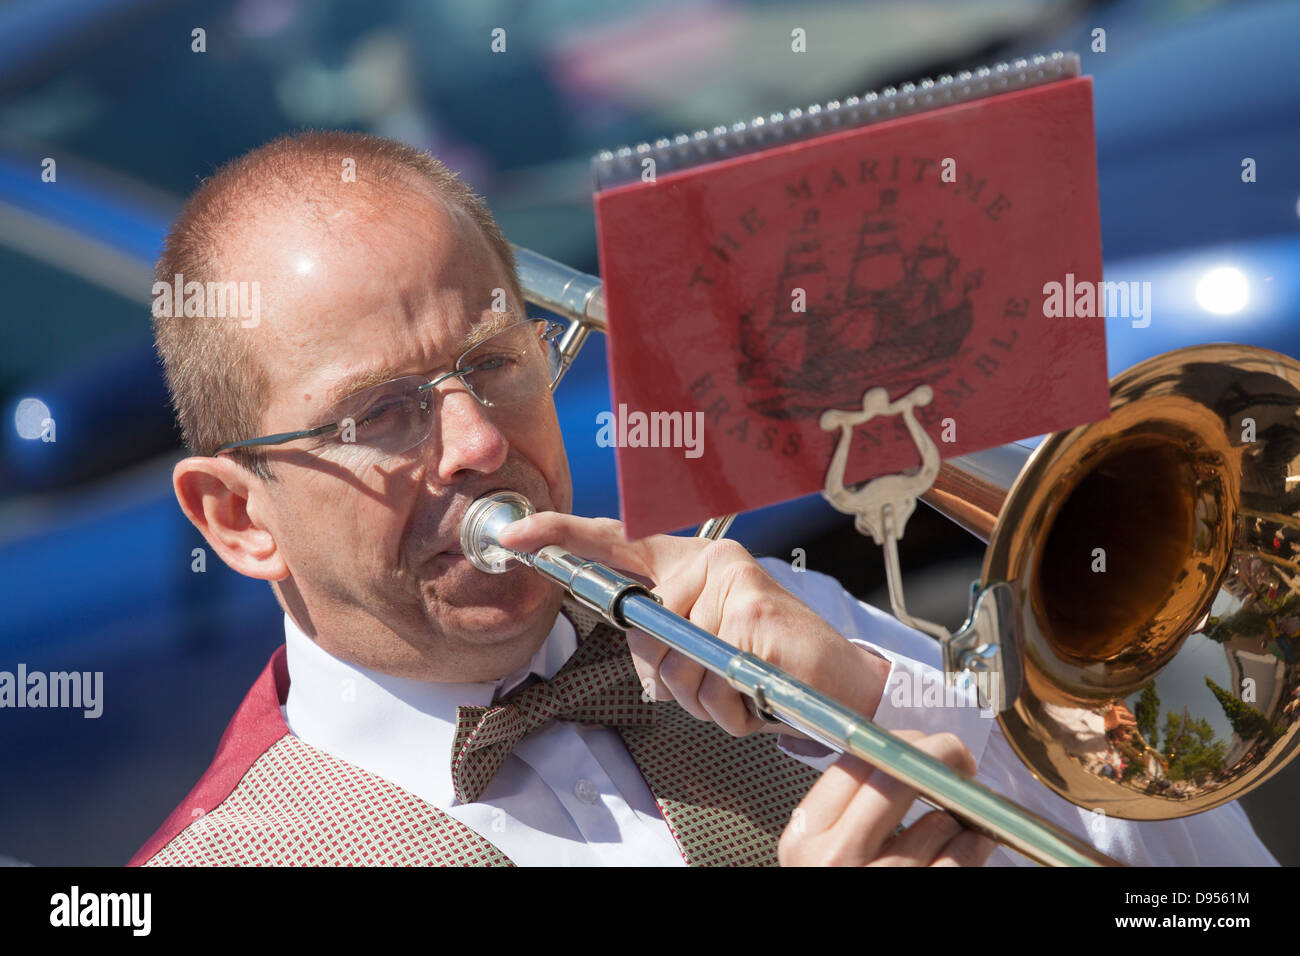 male playing trombone with music sheet Stock Photo